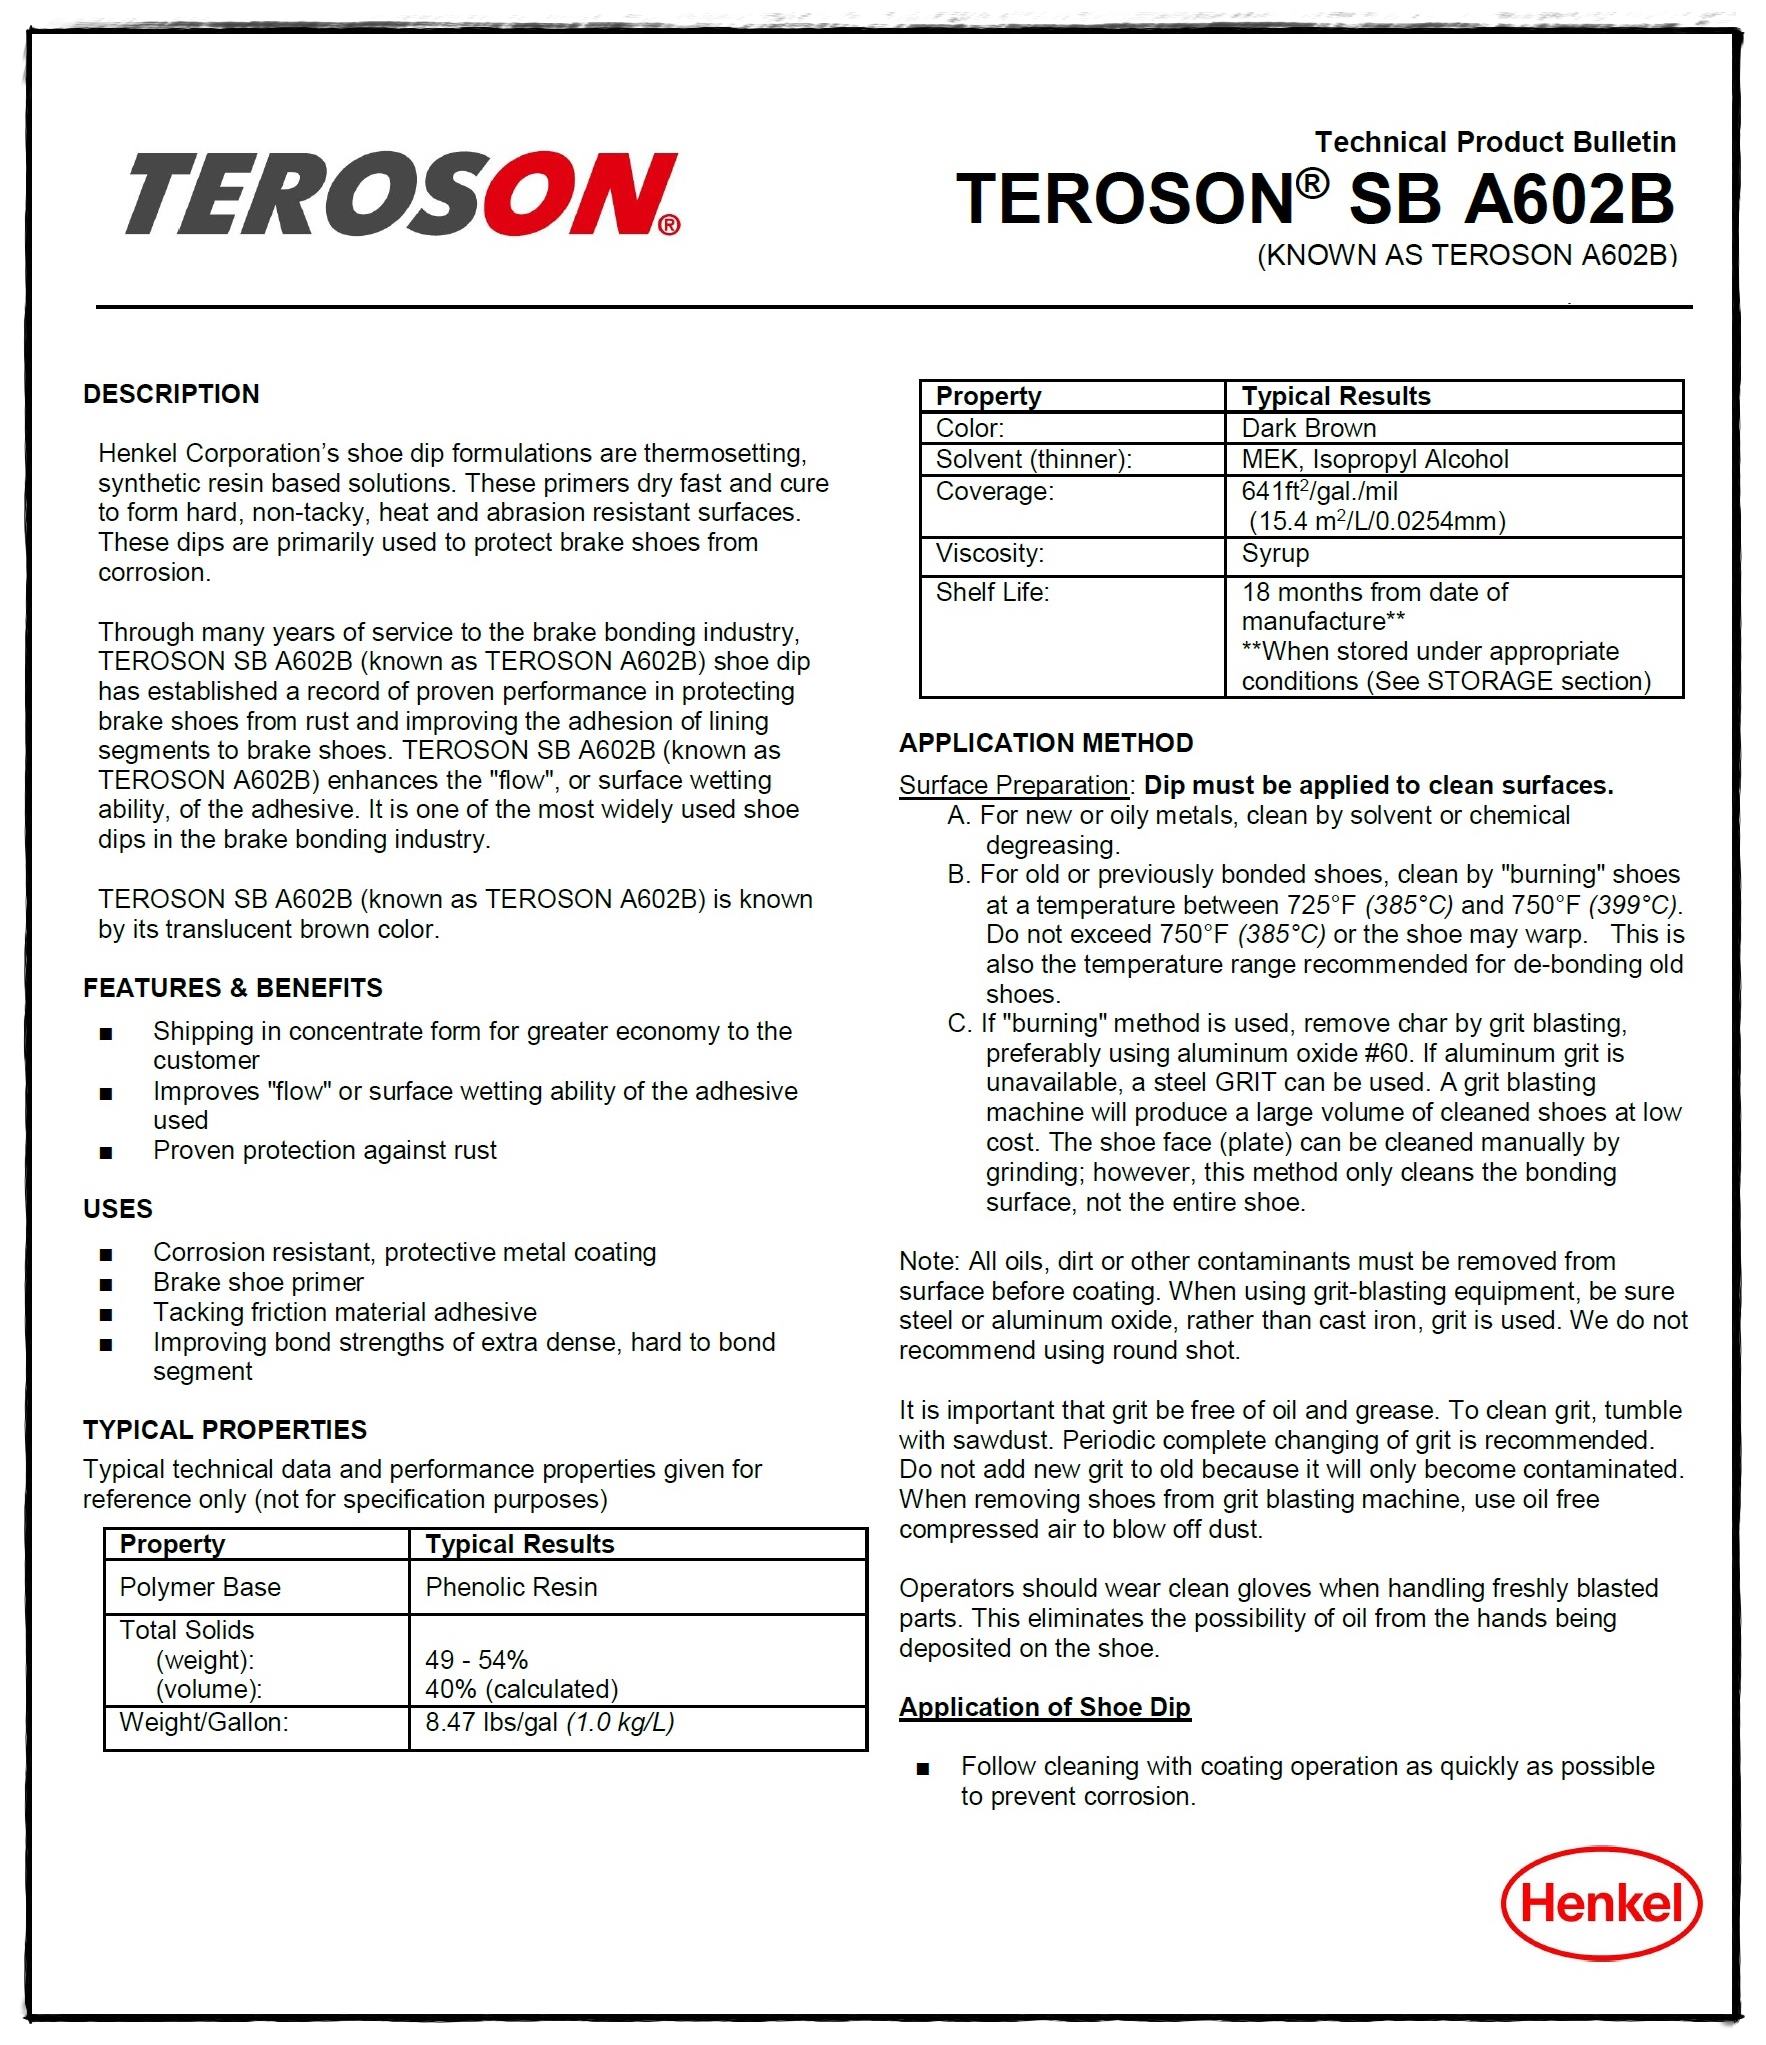 TEROSON SB A602B FRICTION BONDING